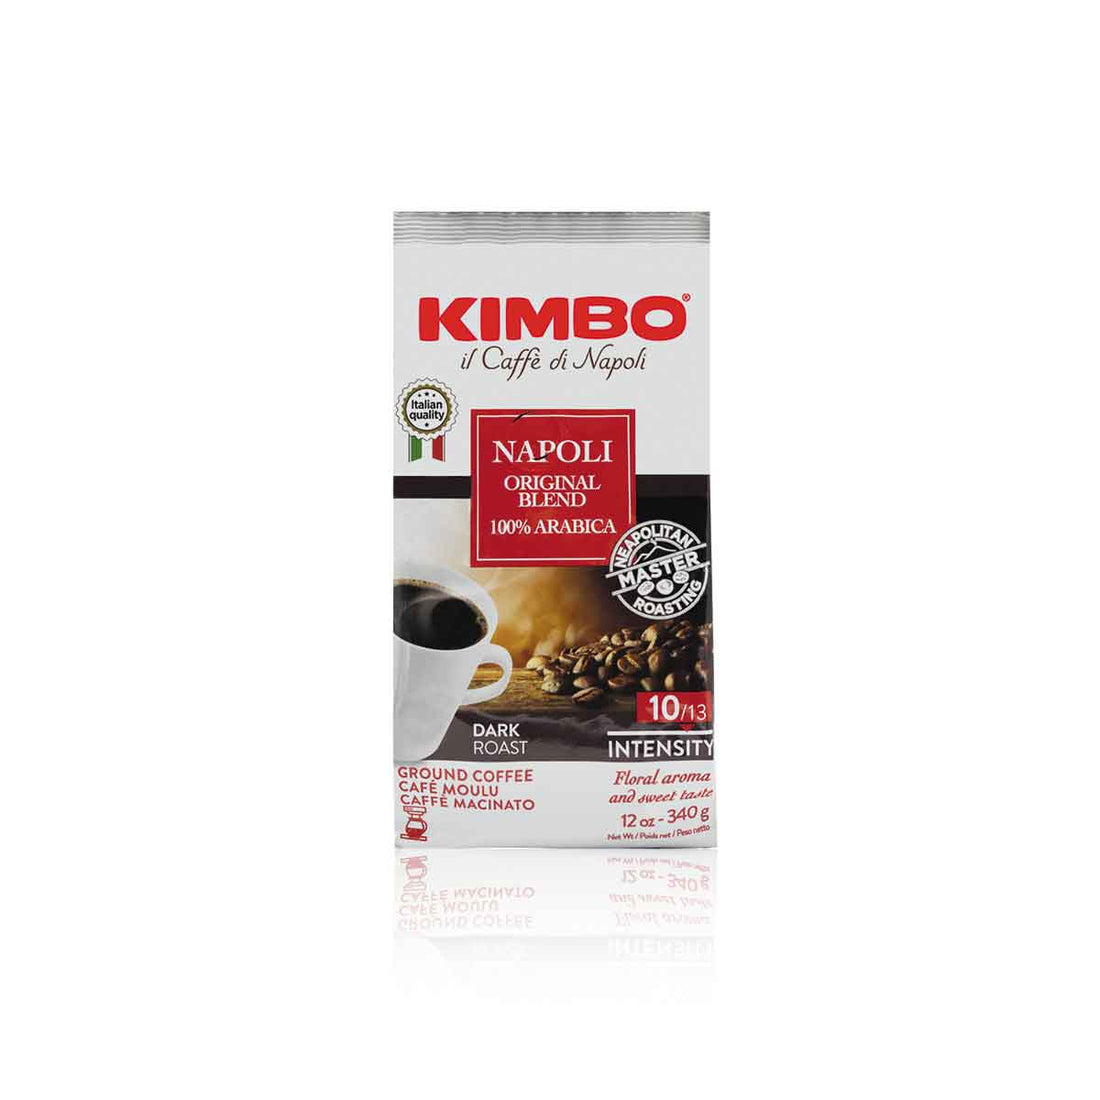 Kimbo il Caffe di Napoli Original Blend Drip Coffee Ground 340g Bag